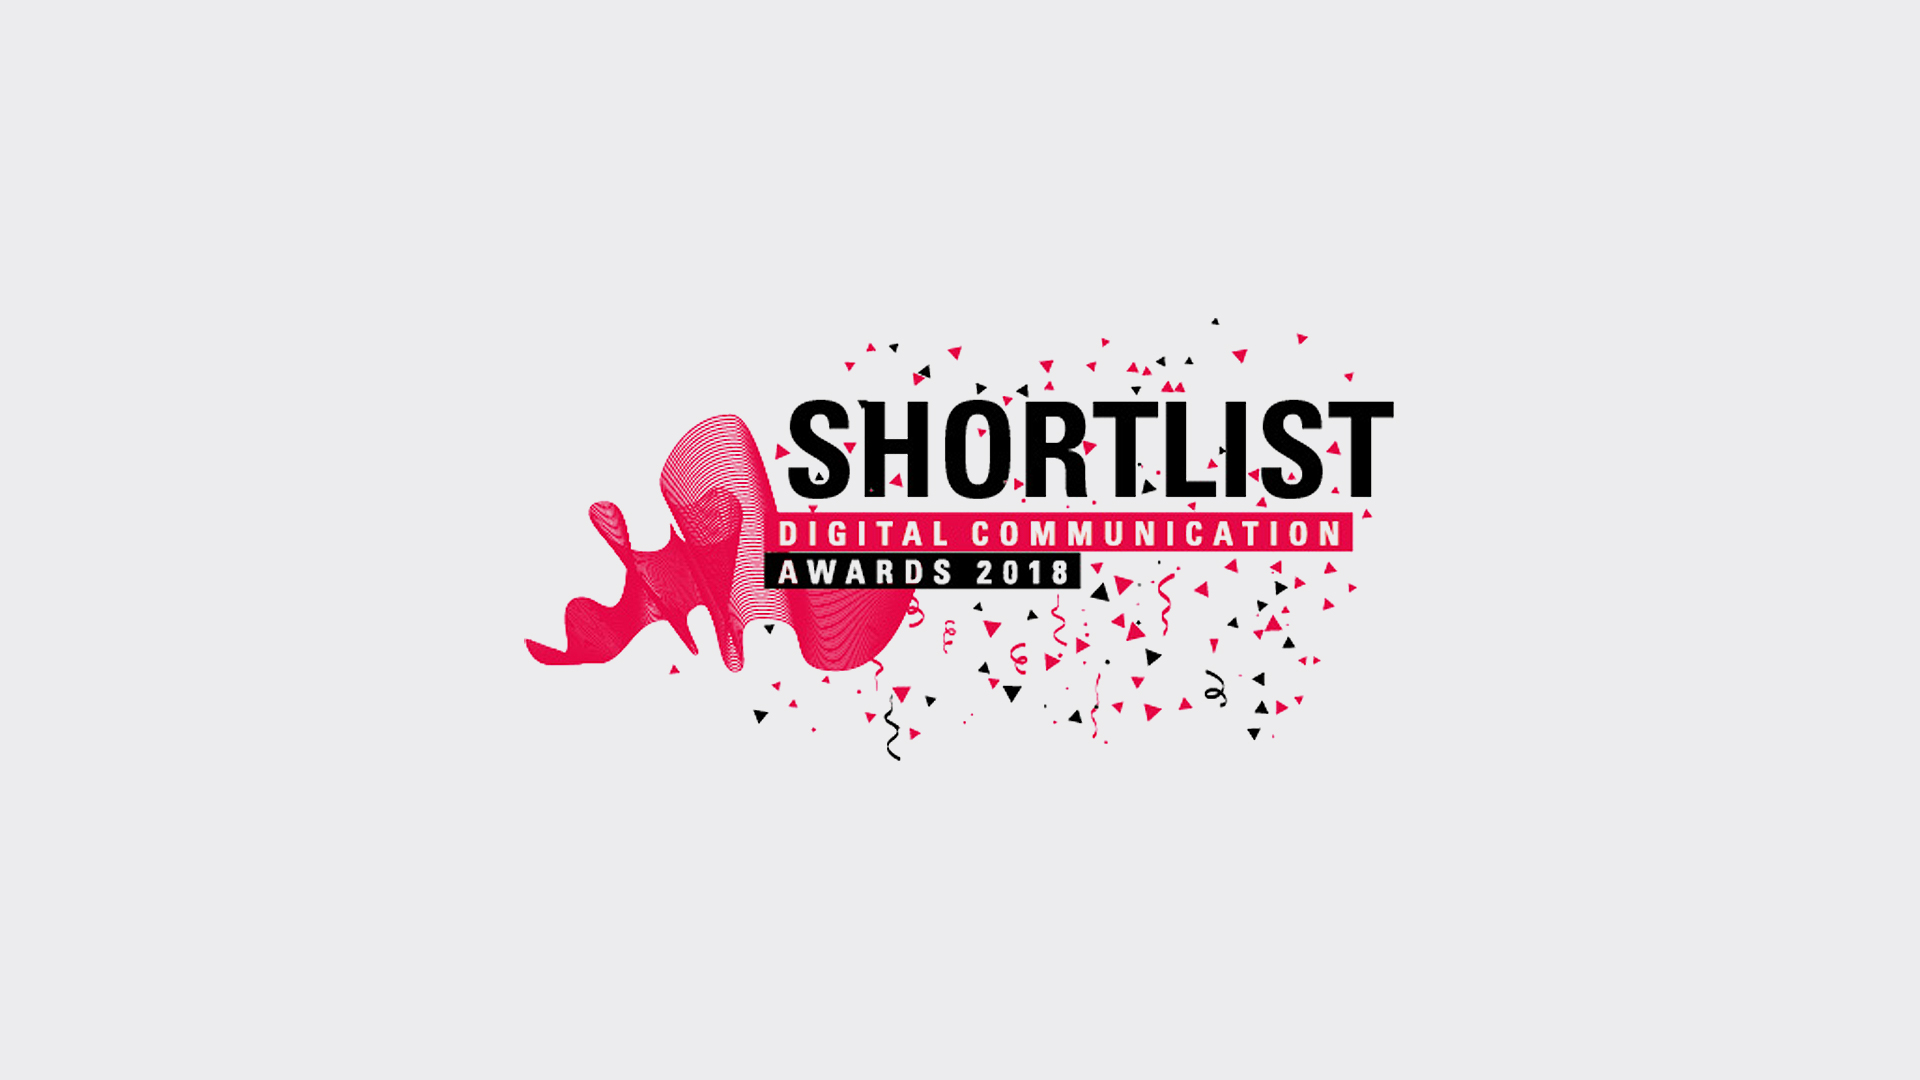 Shortlist Digital Communication Award 2018